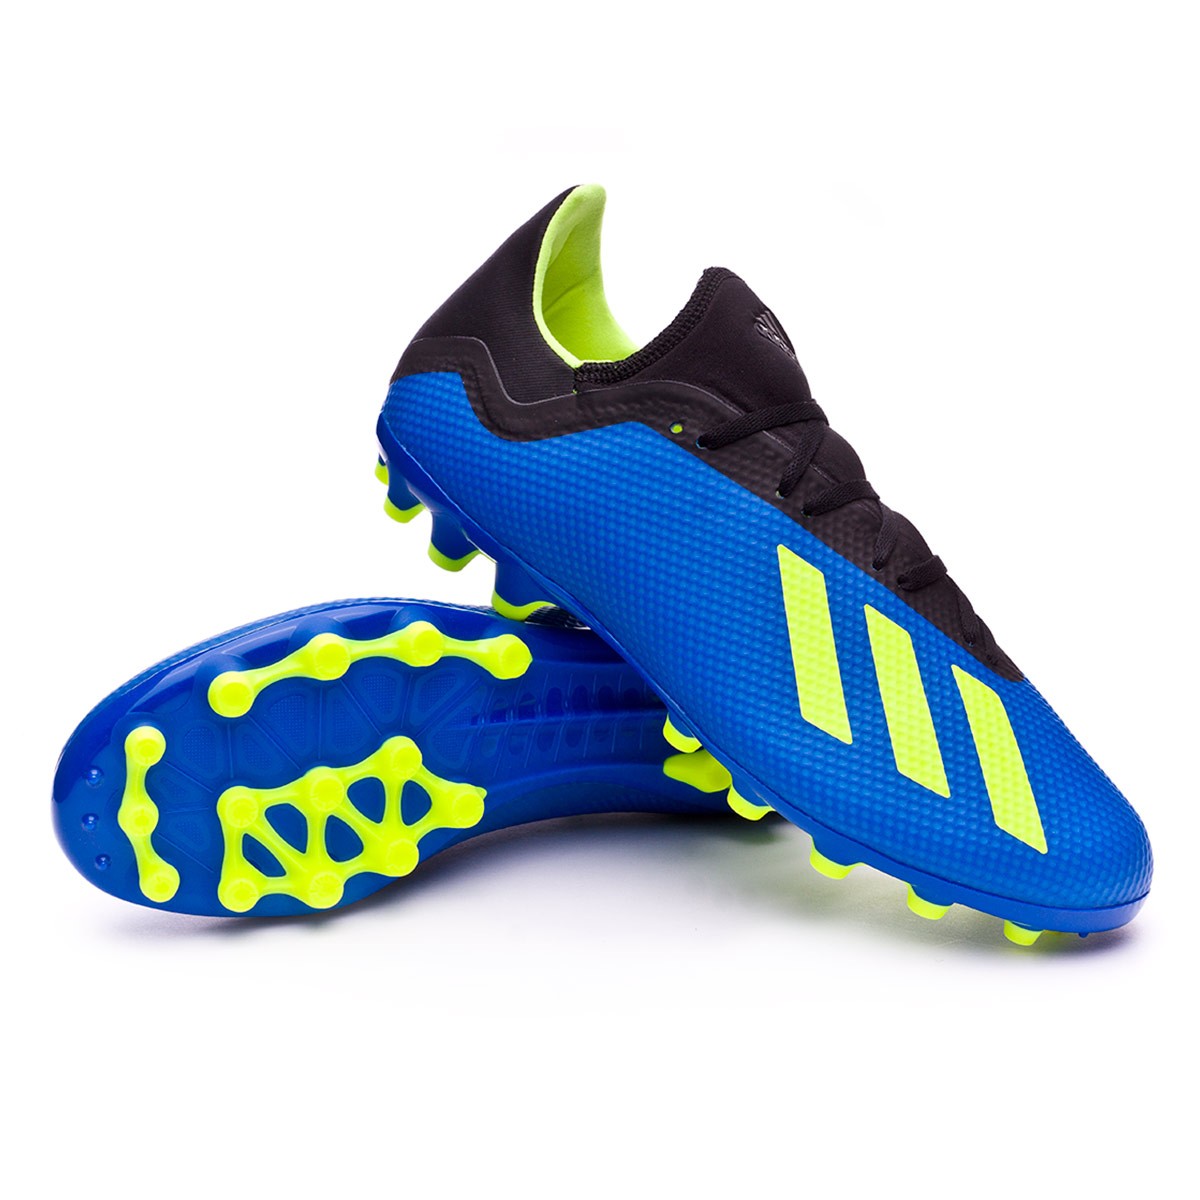 Football Boots adidas X 18.3 AG Foot 